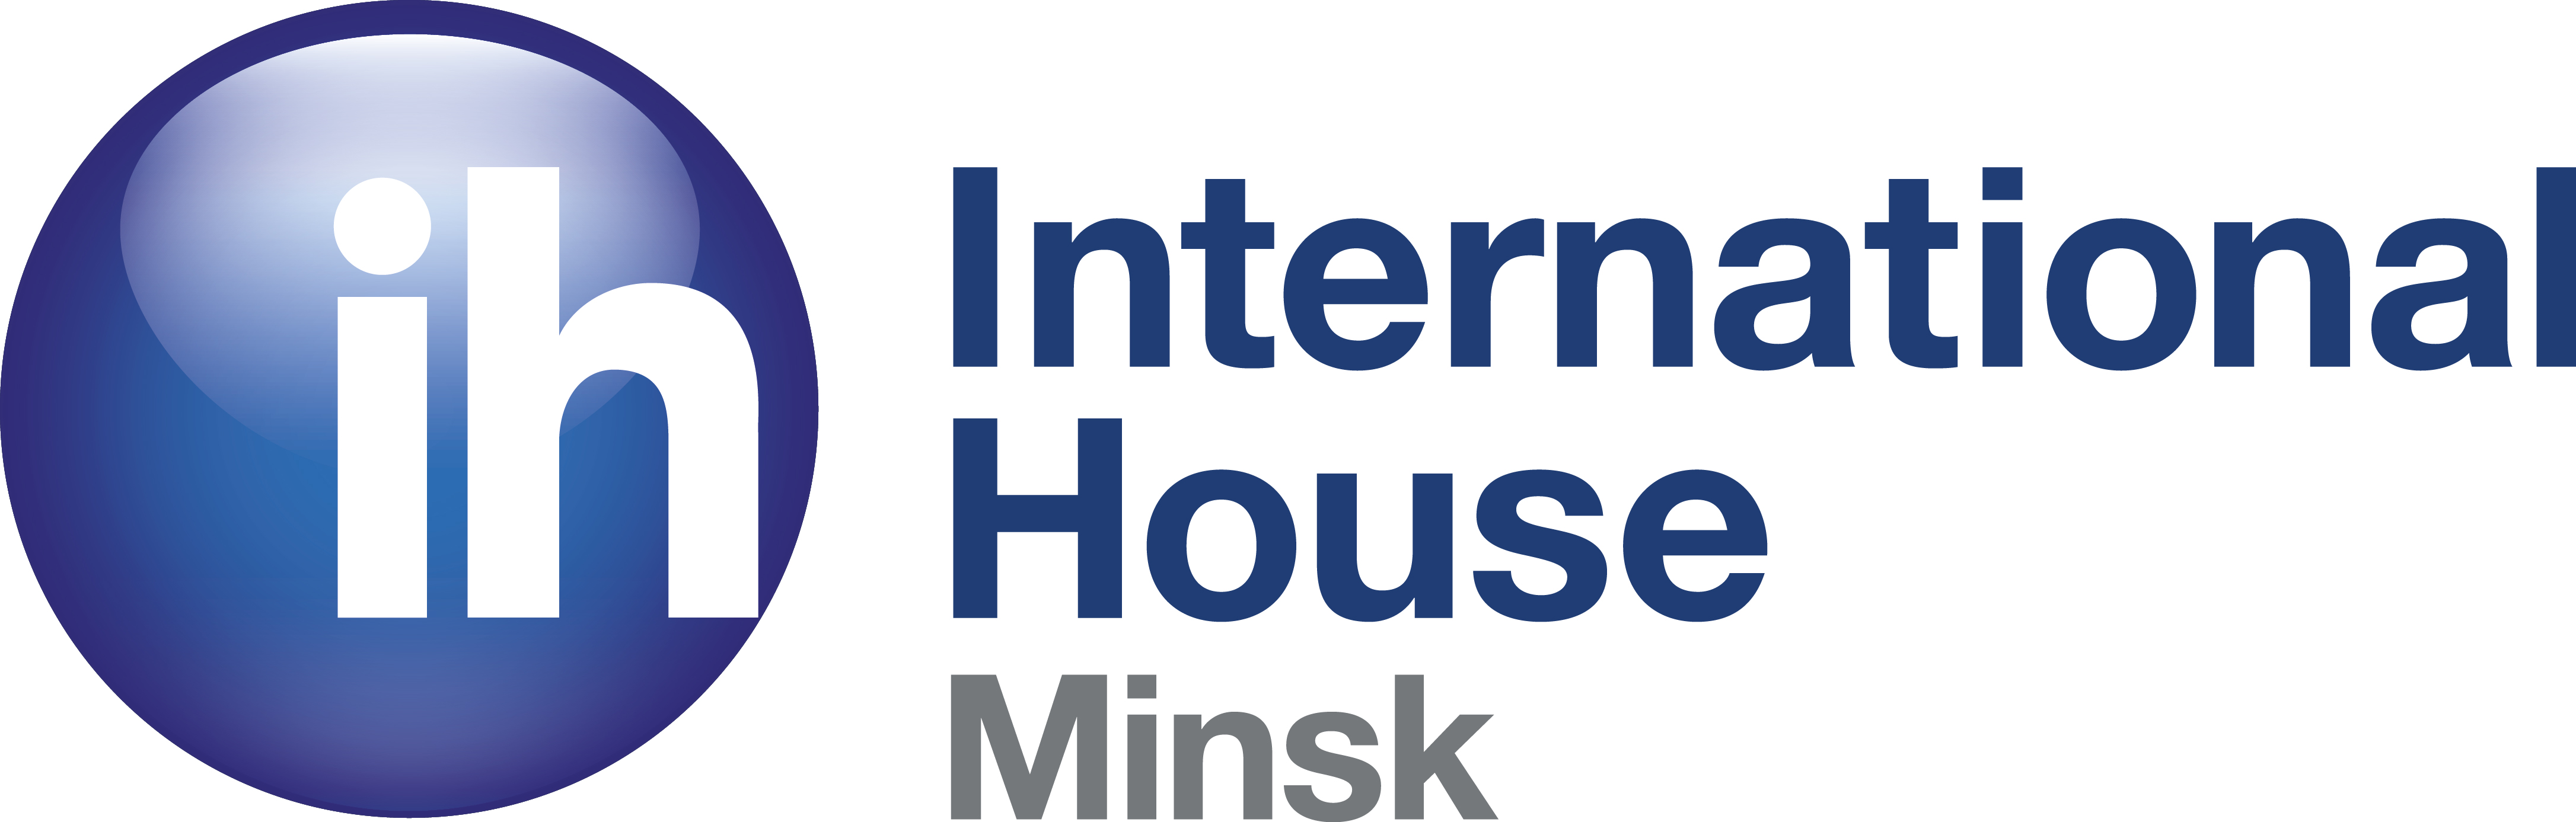 International House Minsk